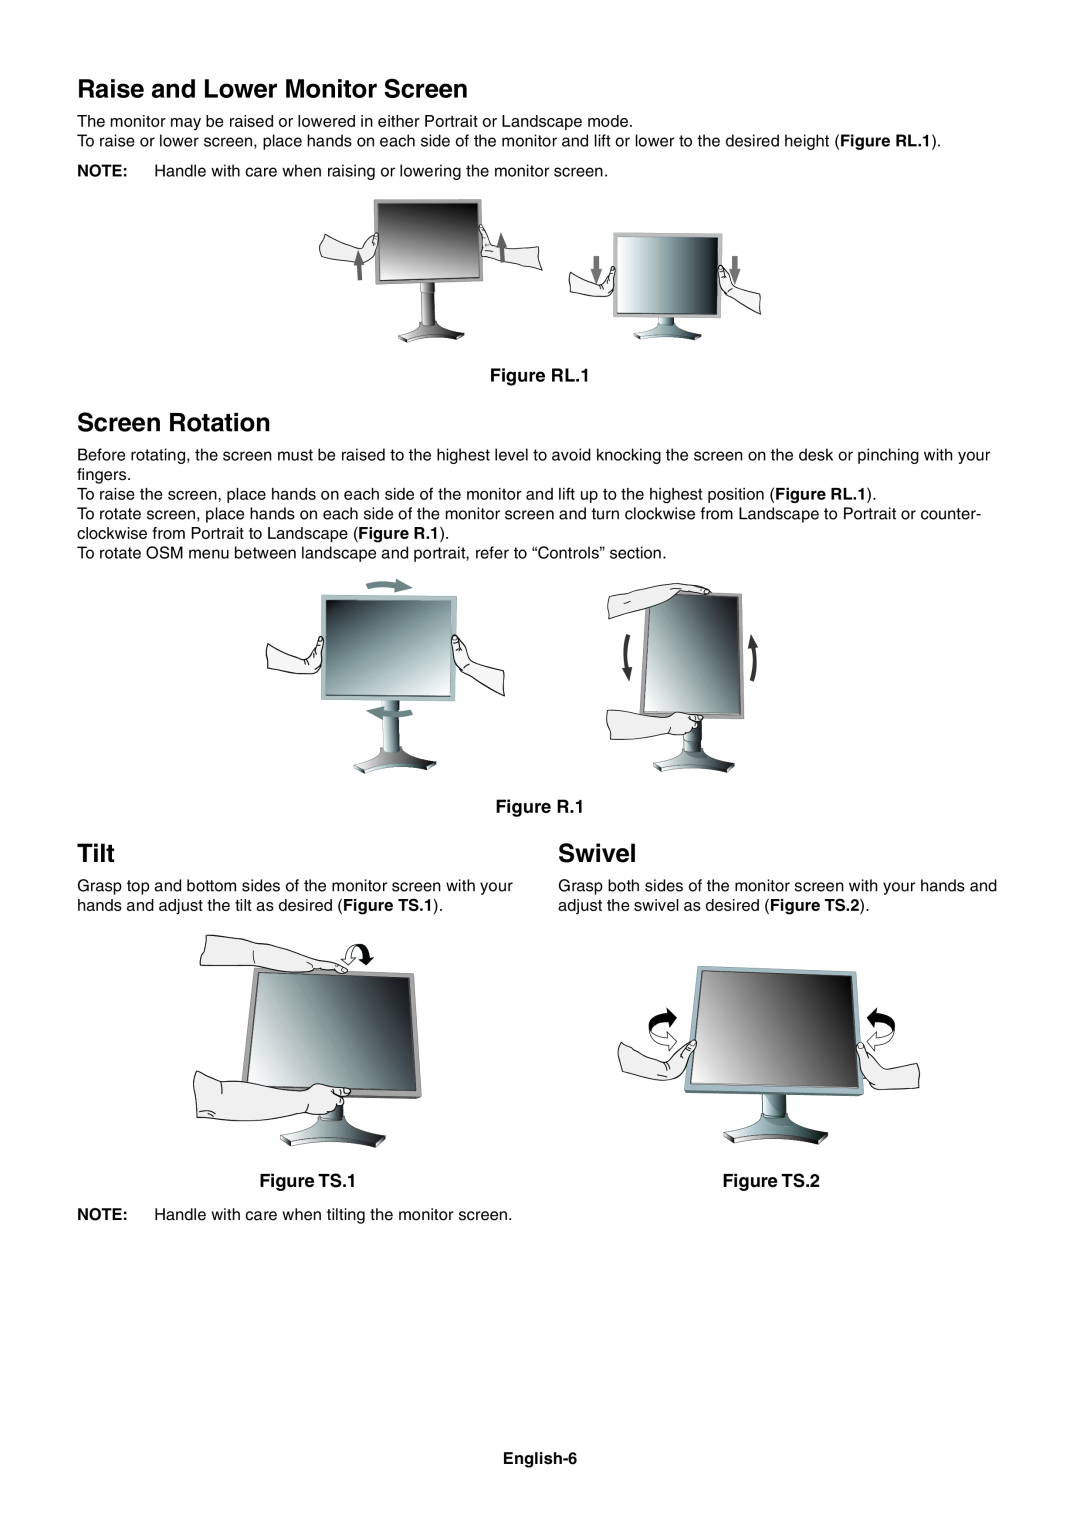 NEC LCD2690WUXi Raise and Lower Monitor Screen, Screen Rotation, Tilt, Swivel, Figure RL.1, Figure R.1, Figure TS.1 